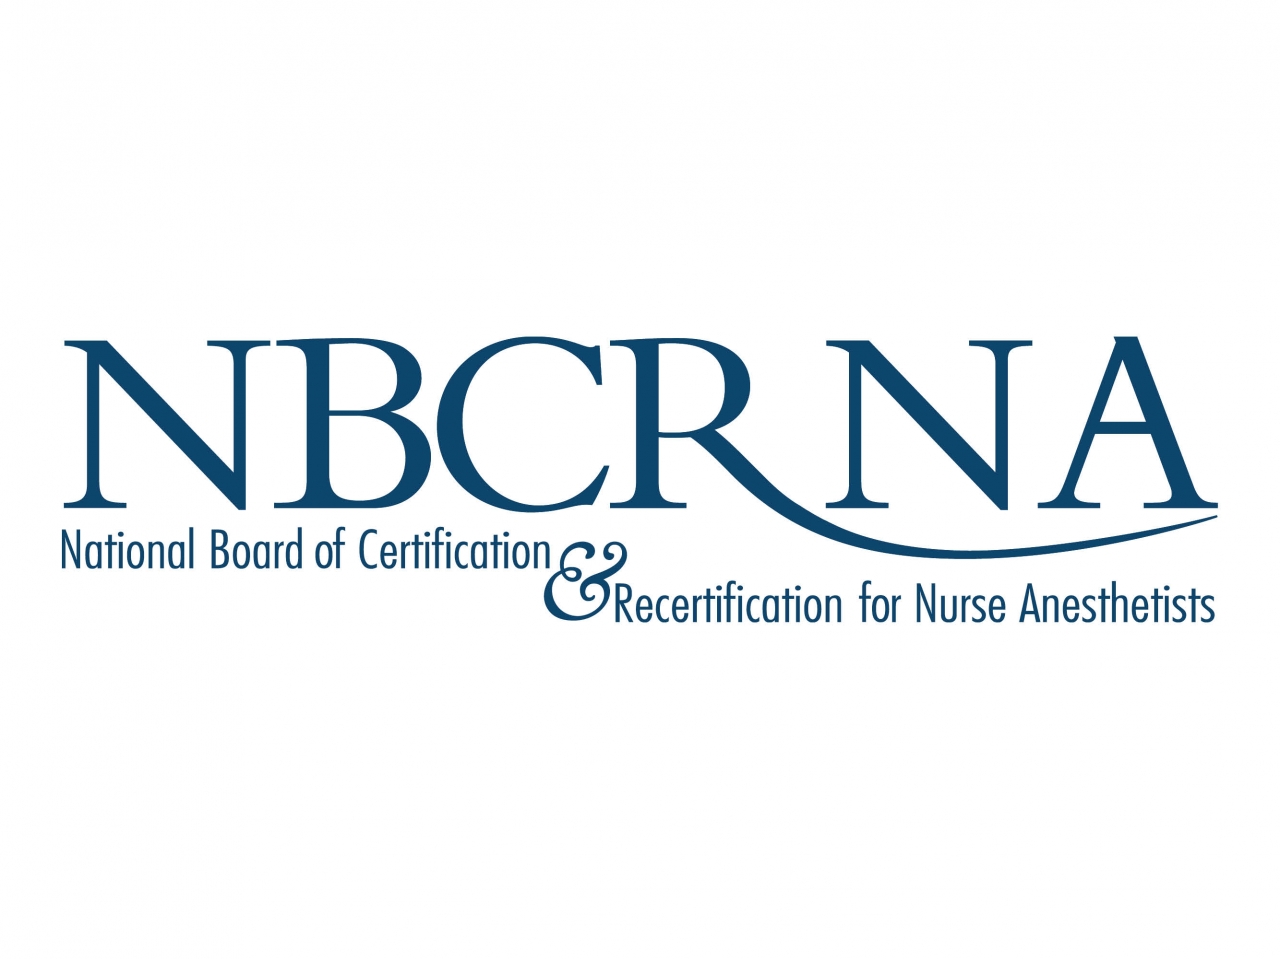 NBCRNA Trademark - Logo with tag.jpg